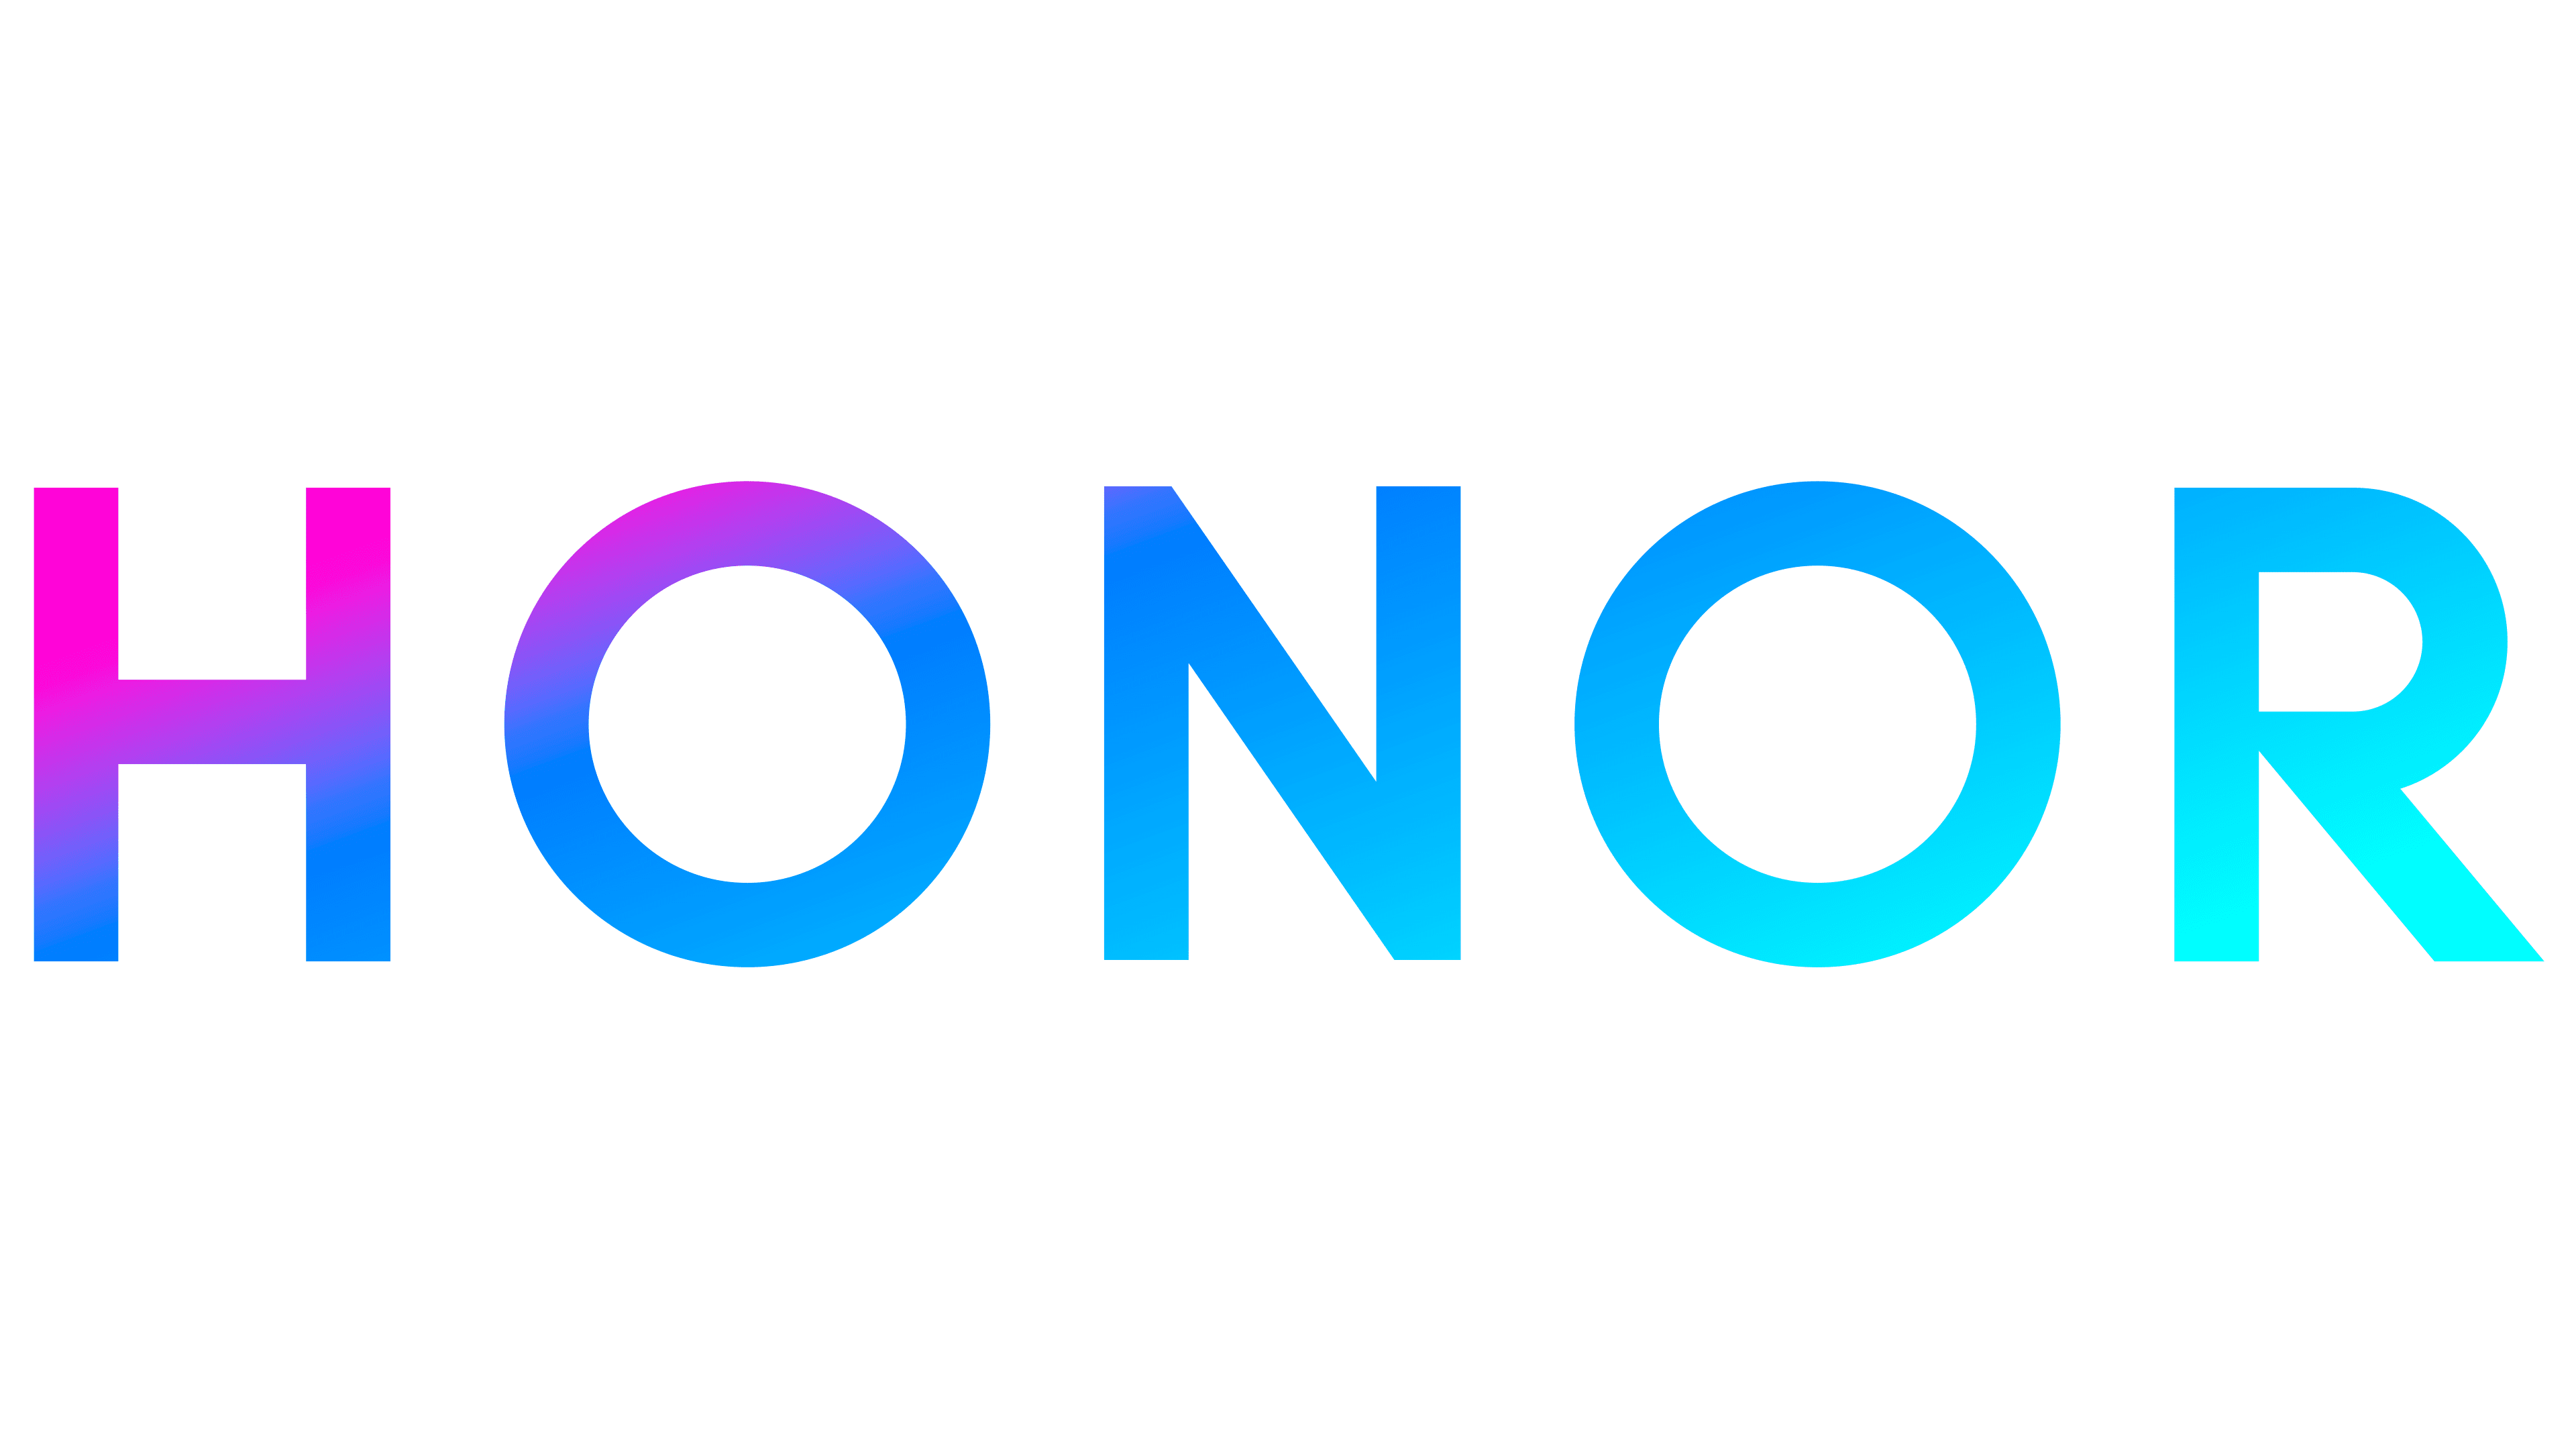 Honor-logo.png